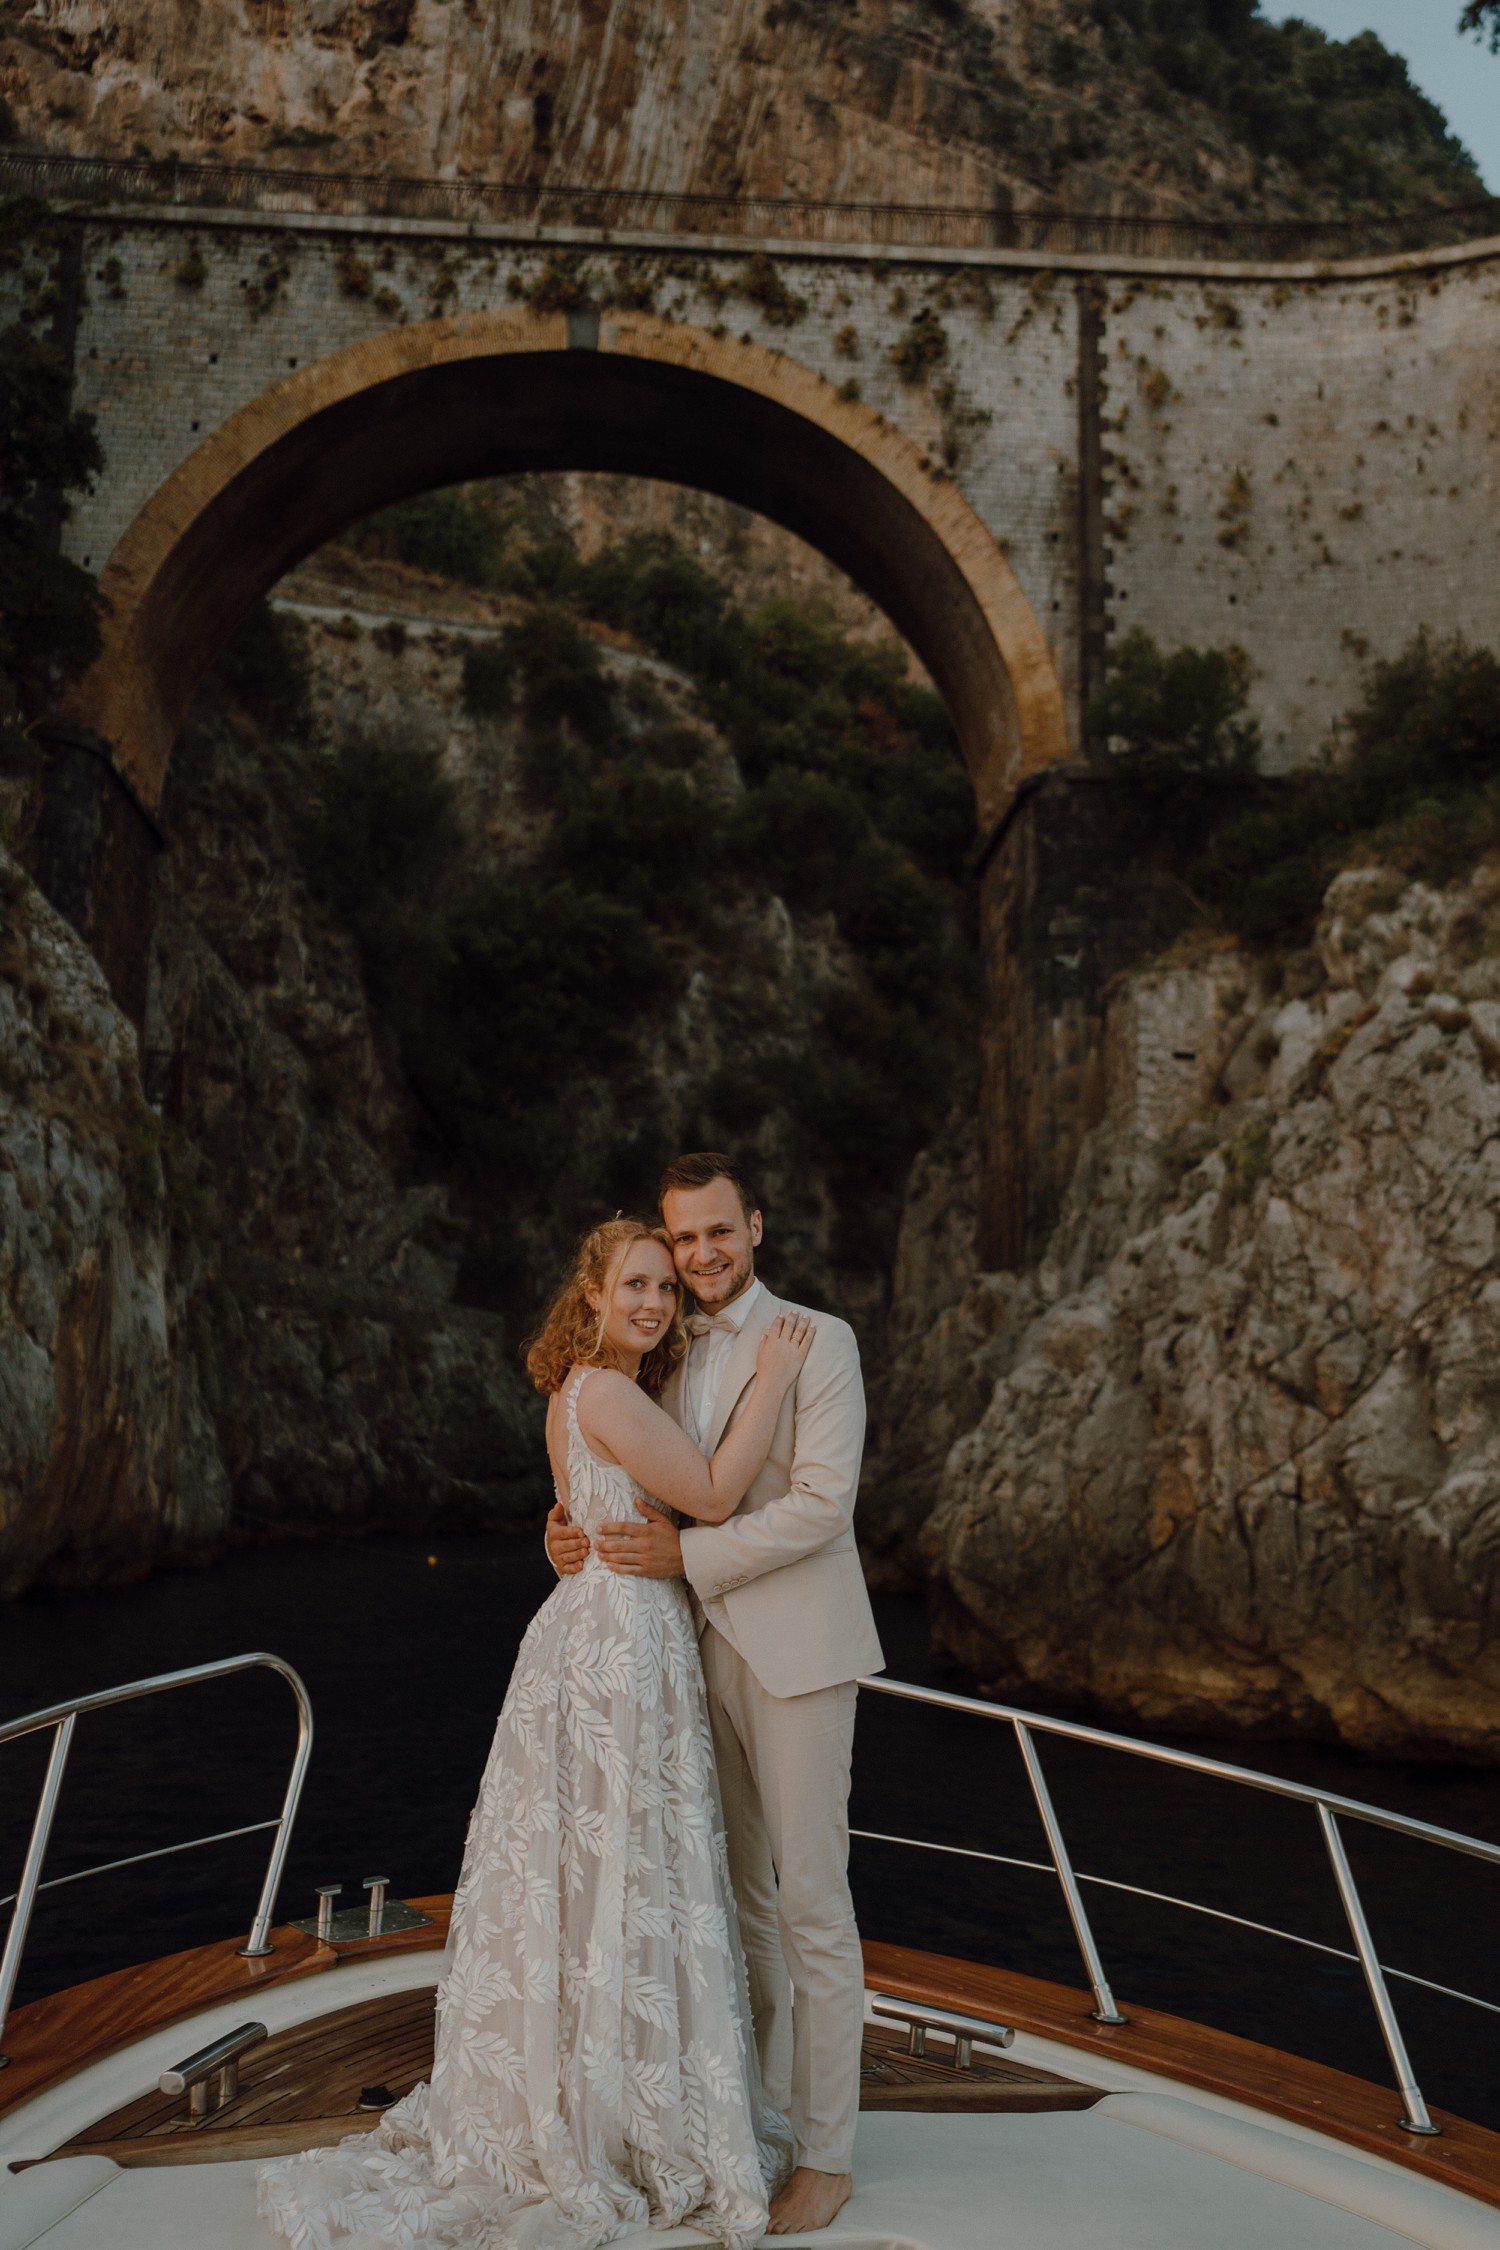 Wedding photos on a boat in Positano Italy. 